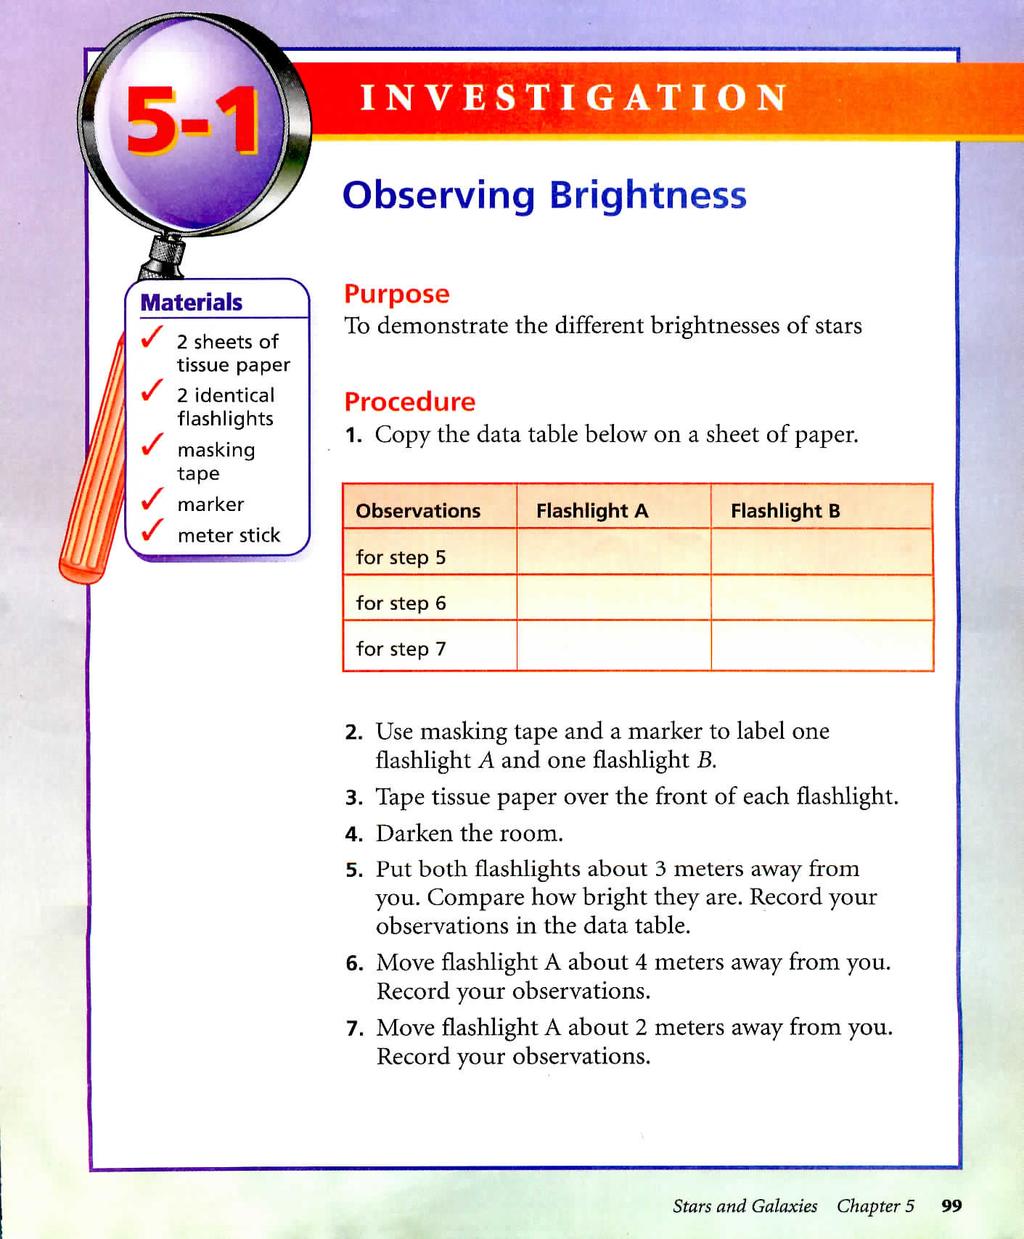 Observing Brightness v v 2 sheets of tissue paper 2 identical flashlights masking tape marker meter stick J Purpose To demonstrate the different brightnesses of stars Procedure 1.